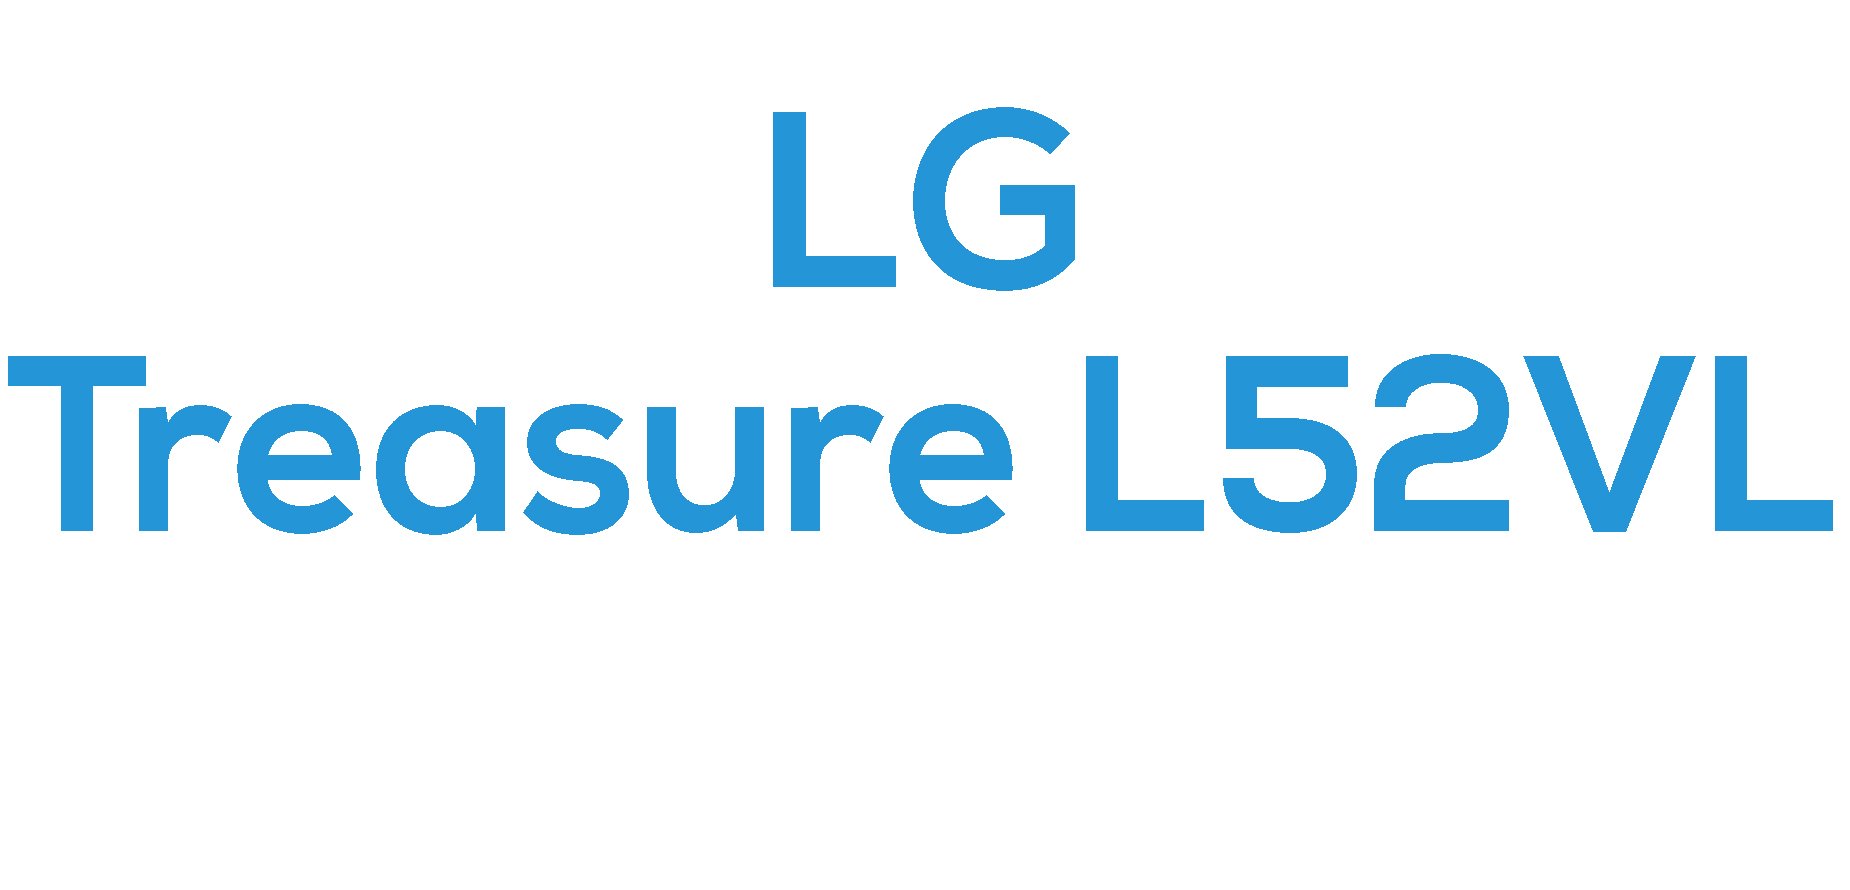 LG Treasure L52VL